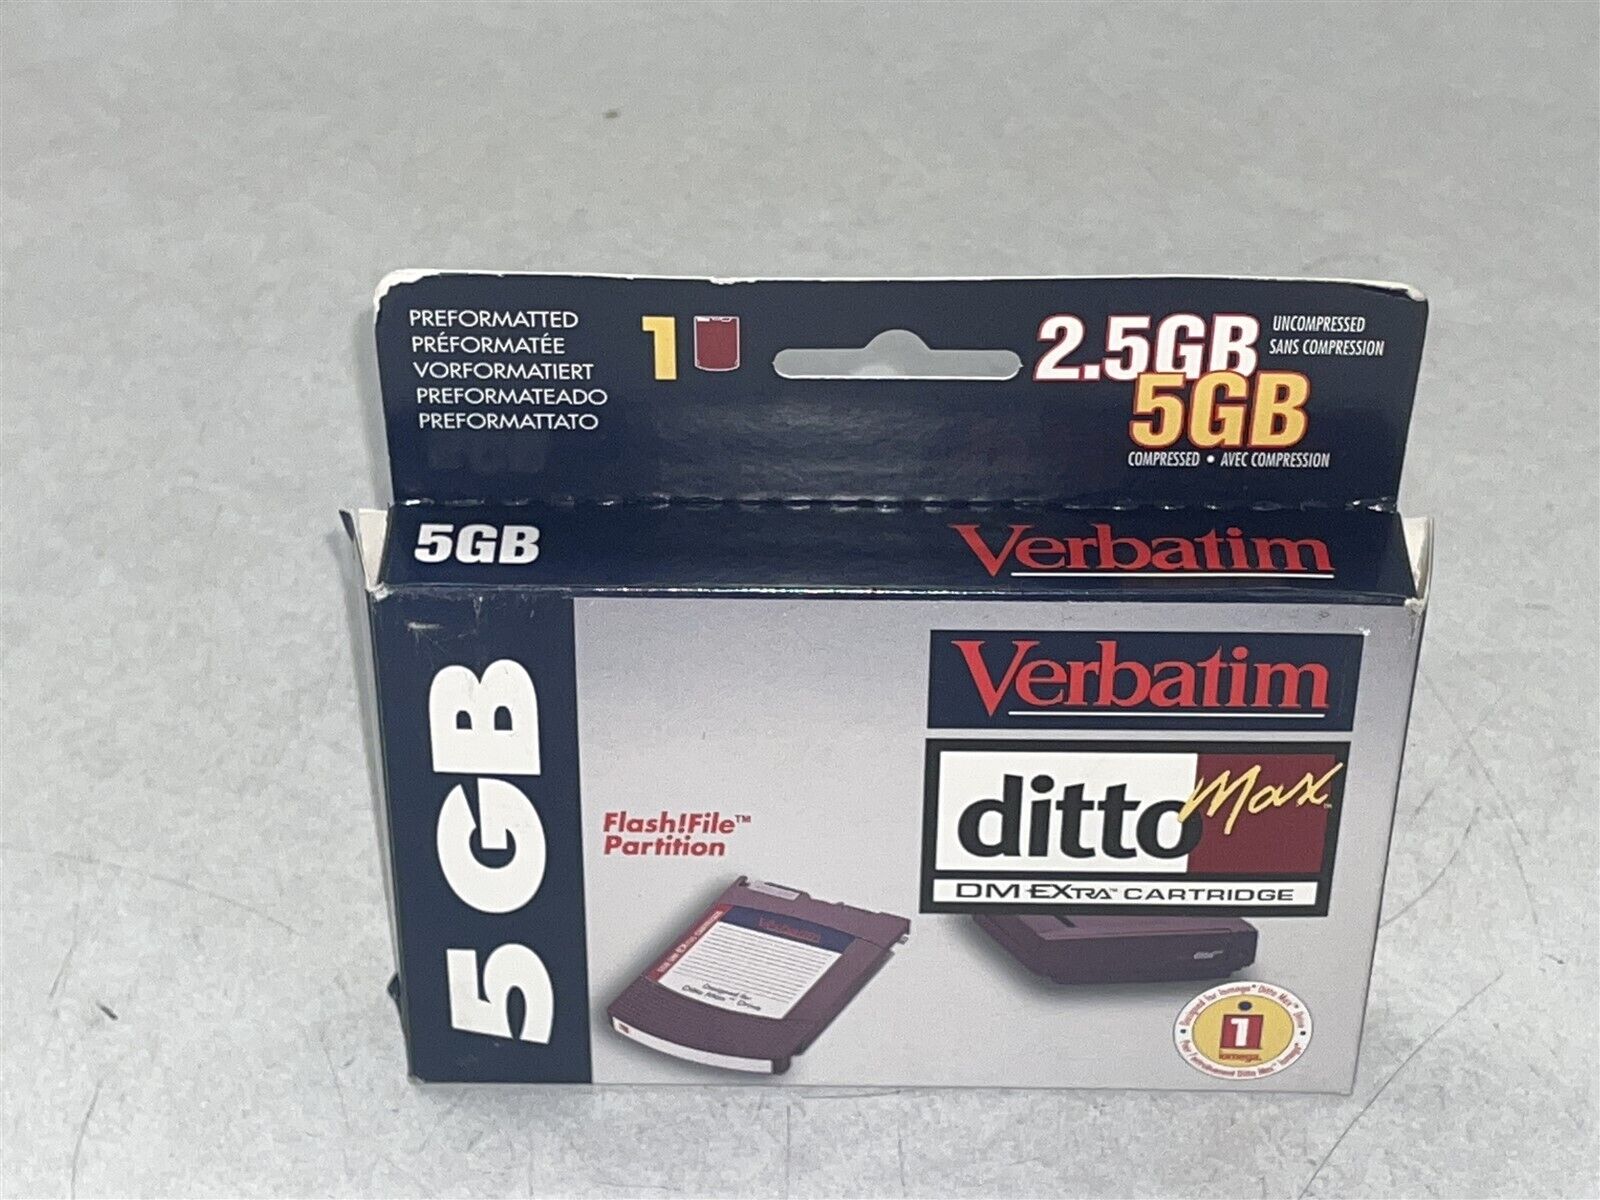 VERBATIM DITTOMAX 2.5GB/5GB DATA TAPE CARTRIDGE W/ FLASHFILE NEW OPEN BOX